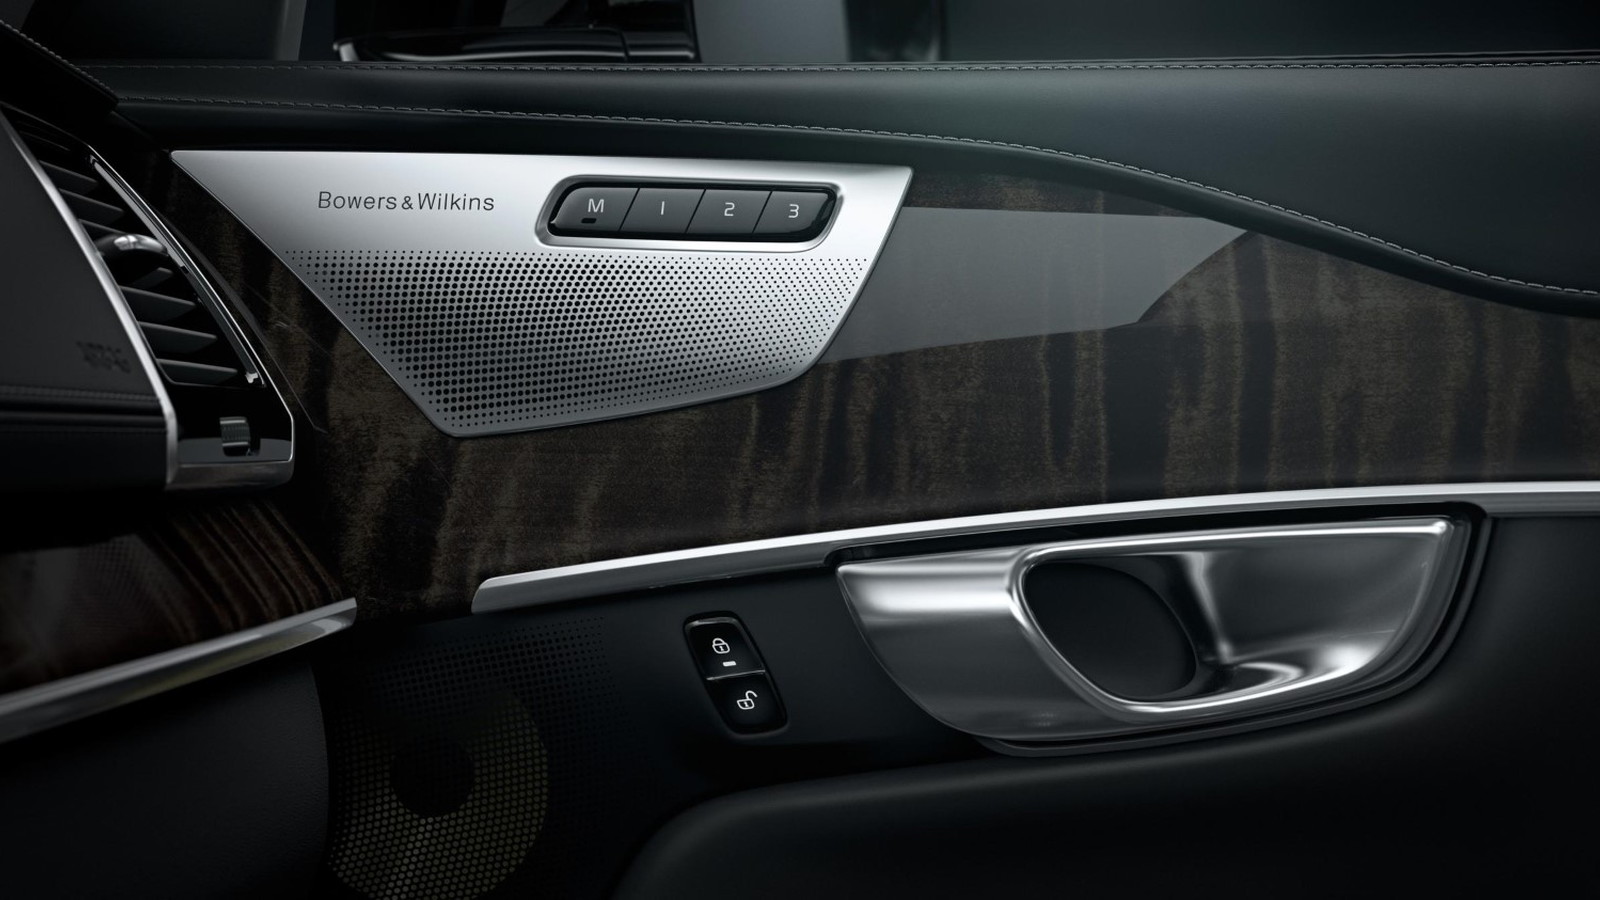 Volvo XC90 Bowers & Wilkins audio system